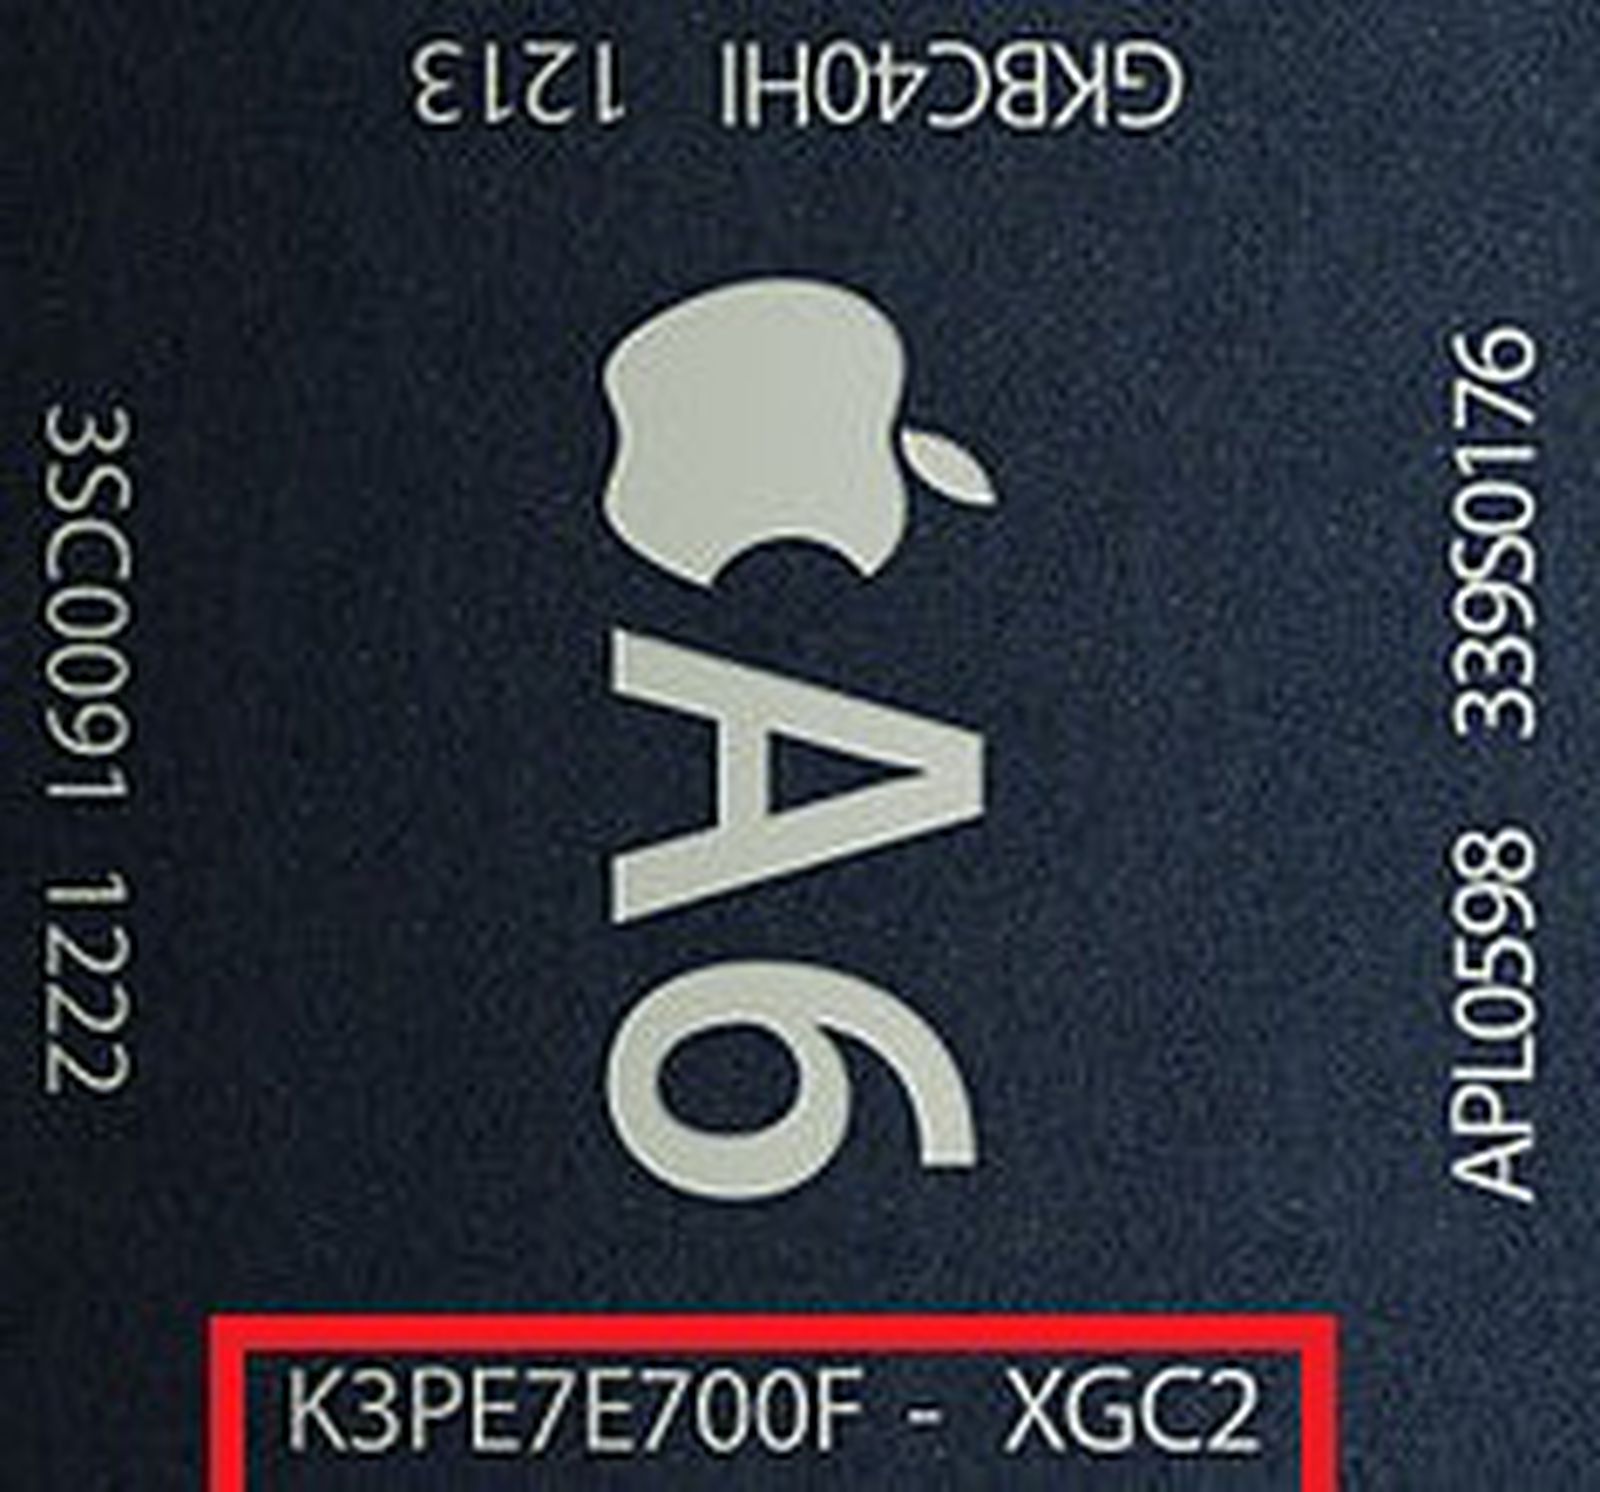 Apple S New Iphone 5 Has 1gb Of Ram Macrumors